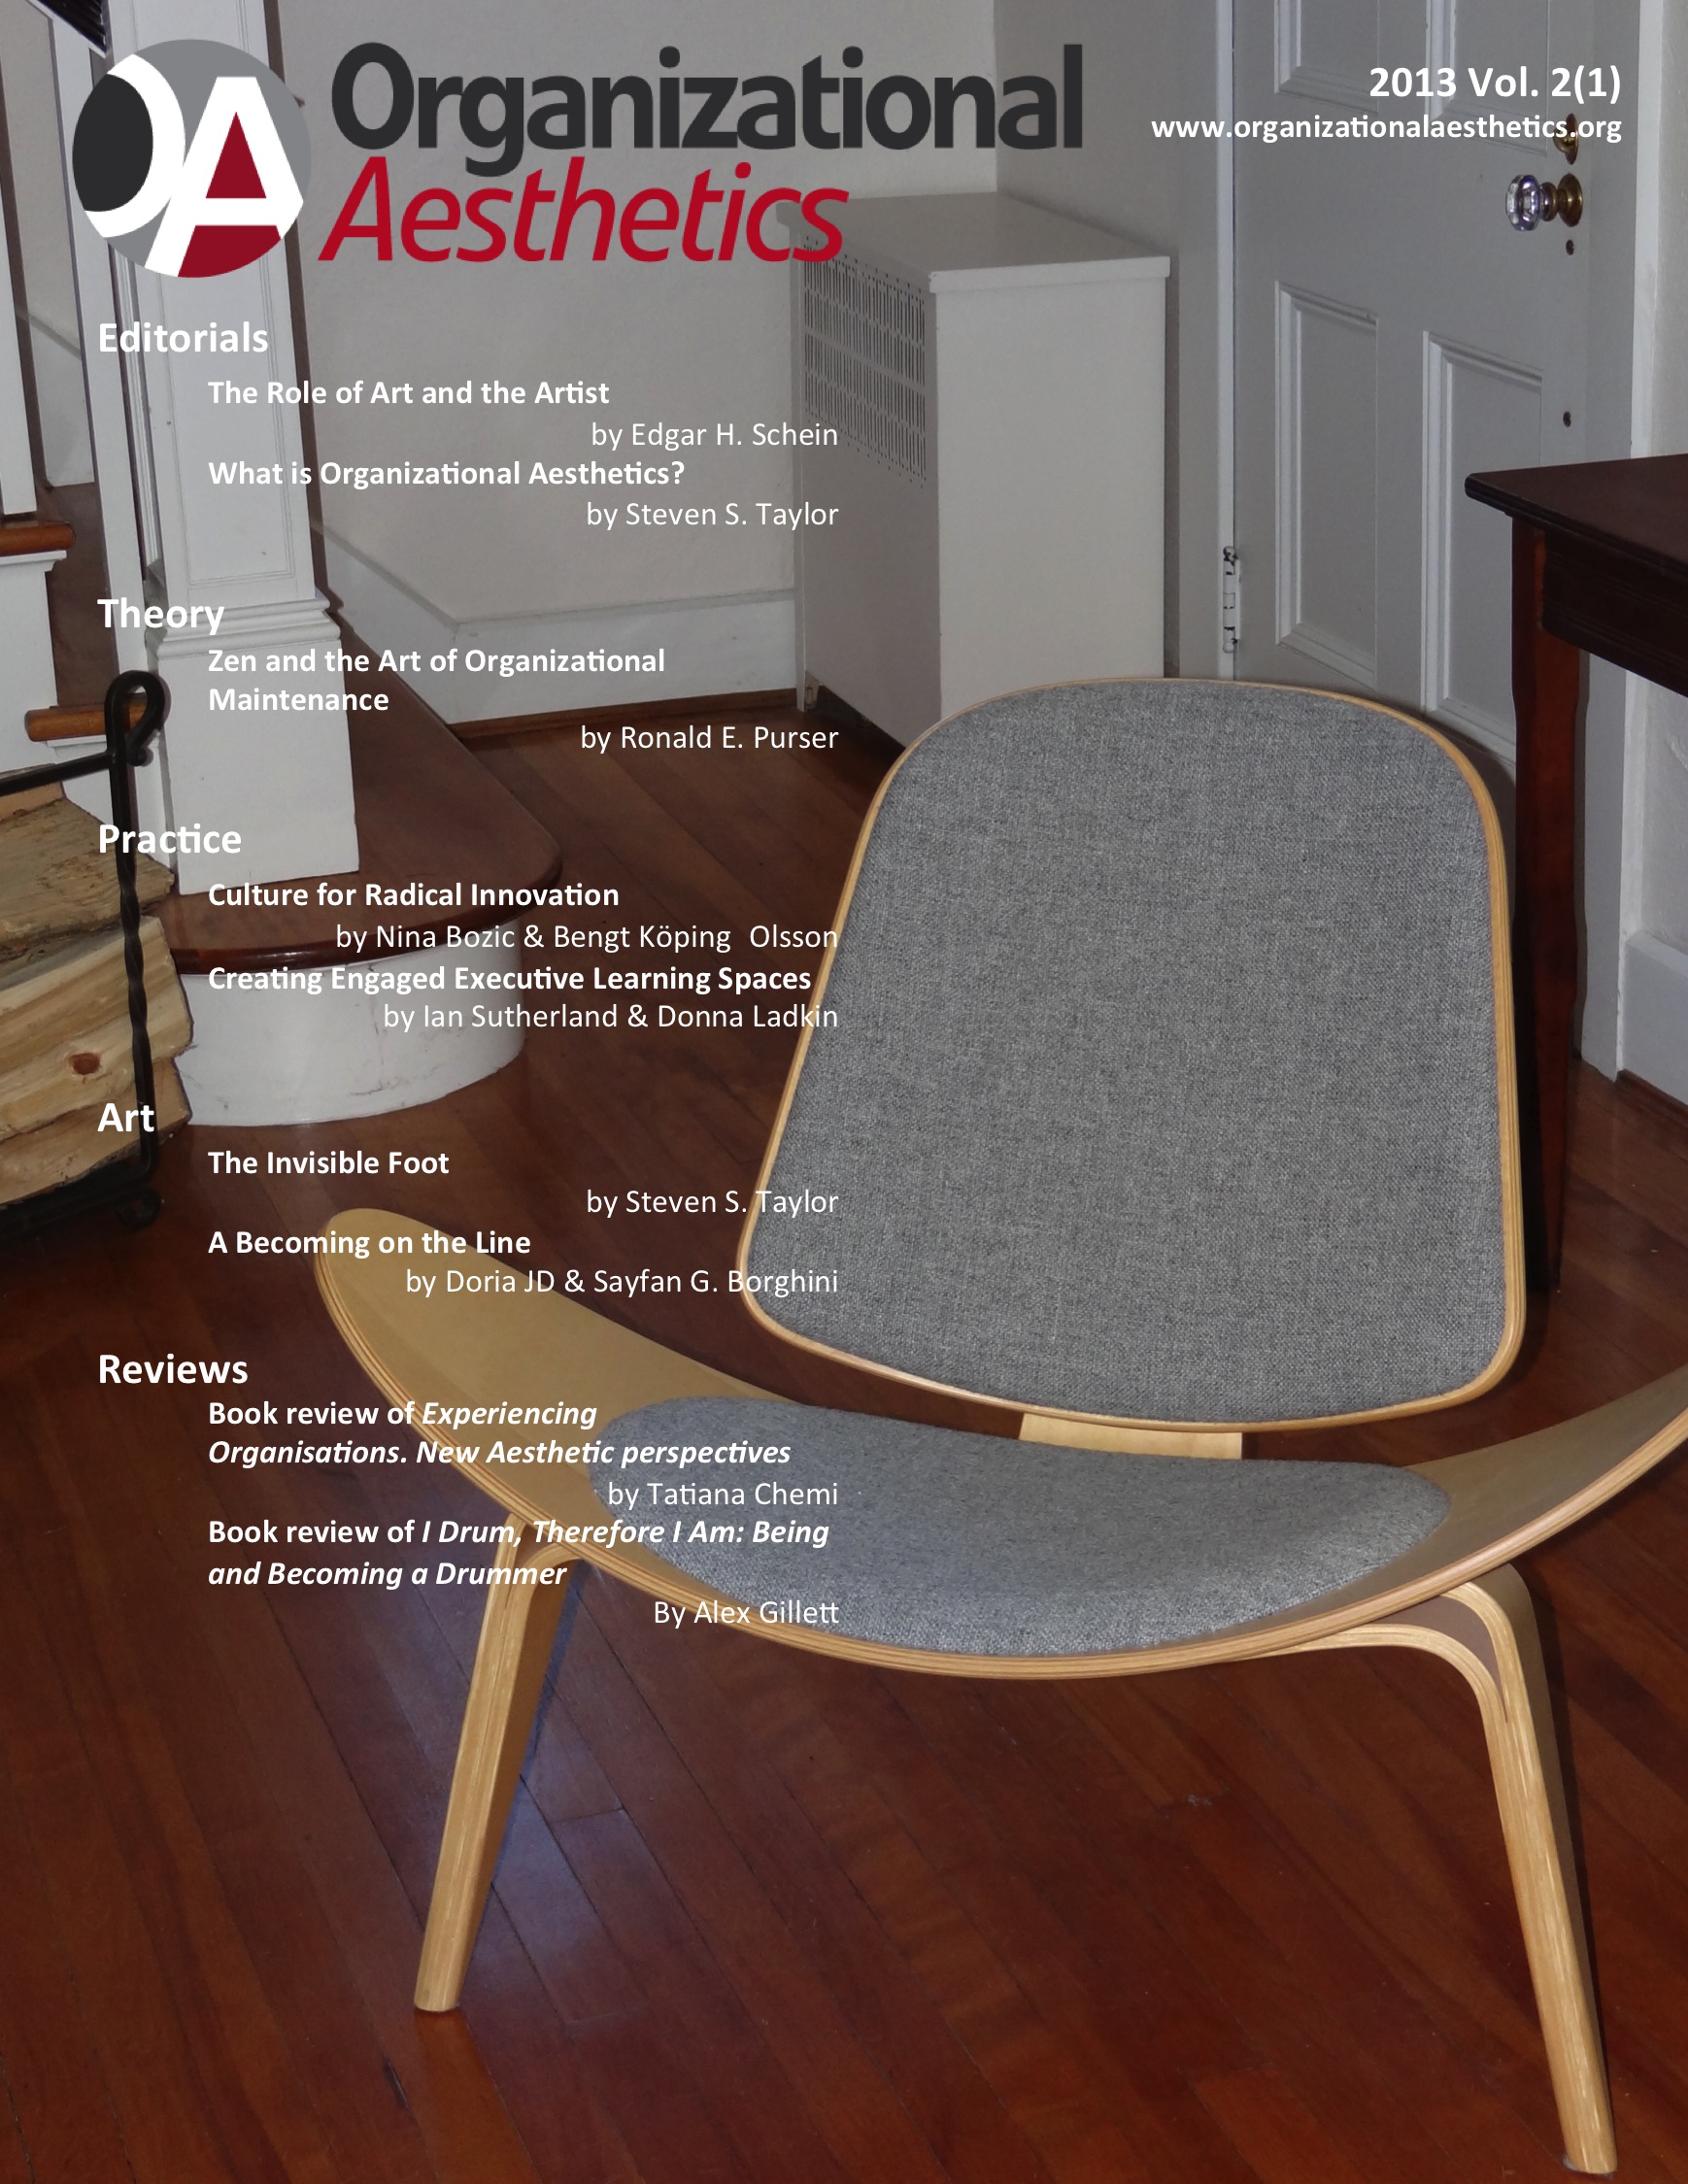 Organizational Aesthetics Cover Issue Vol. 2(1)